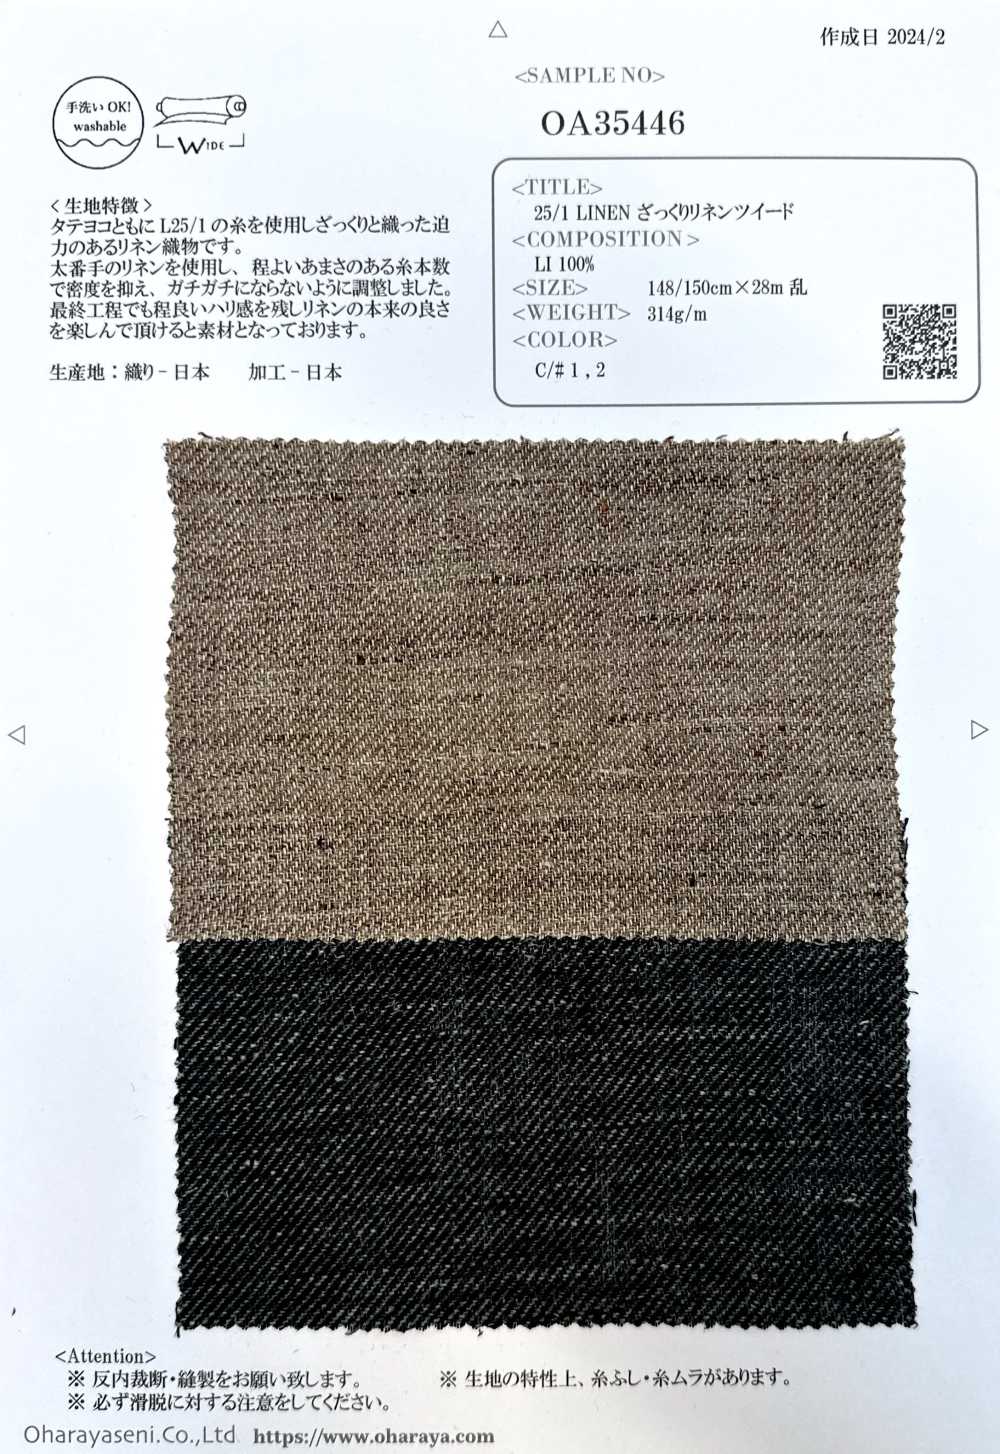 OA35446 25/1 LEINEN Grober Leinen-Tweed[Textilgewebe] Oharayaseni